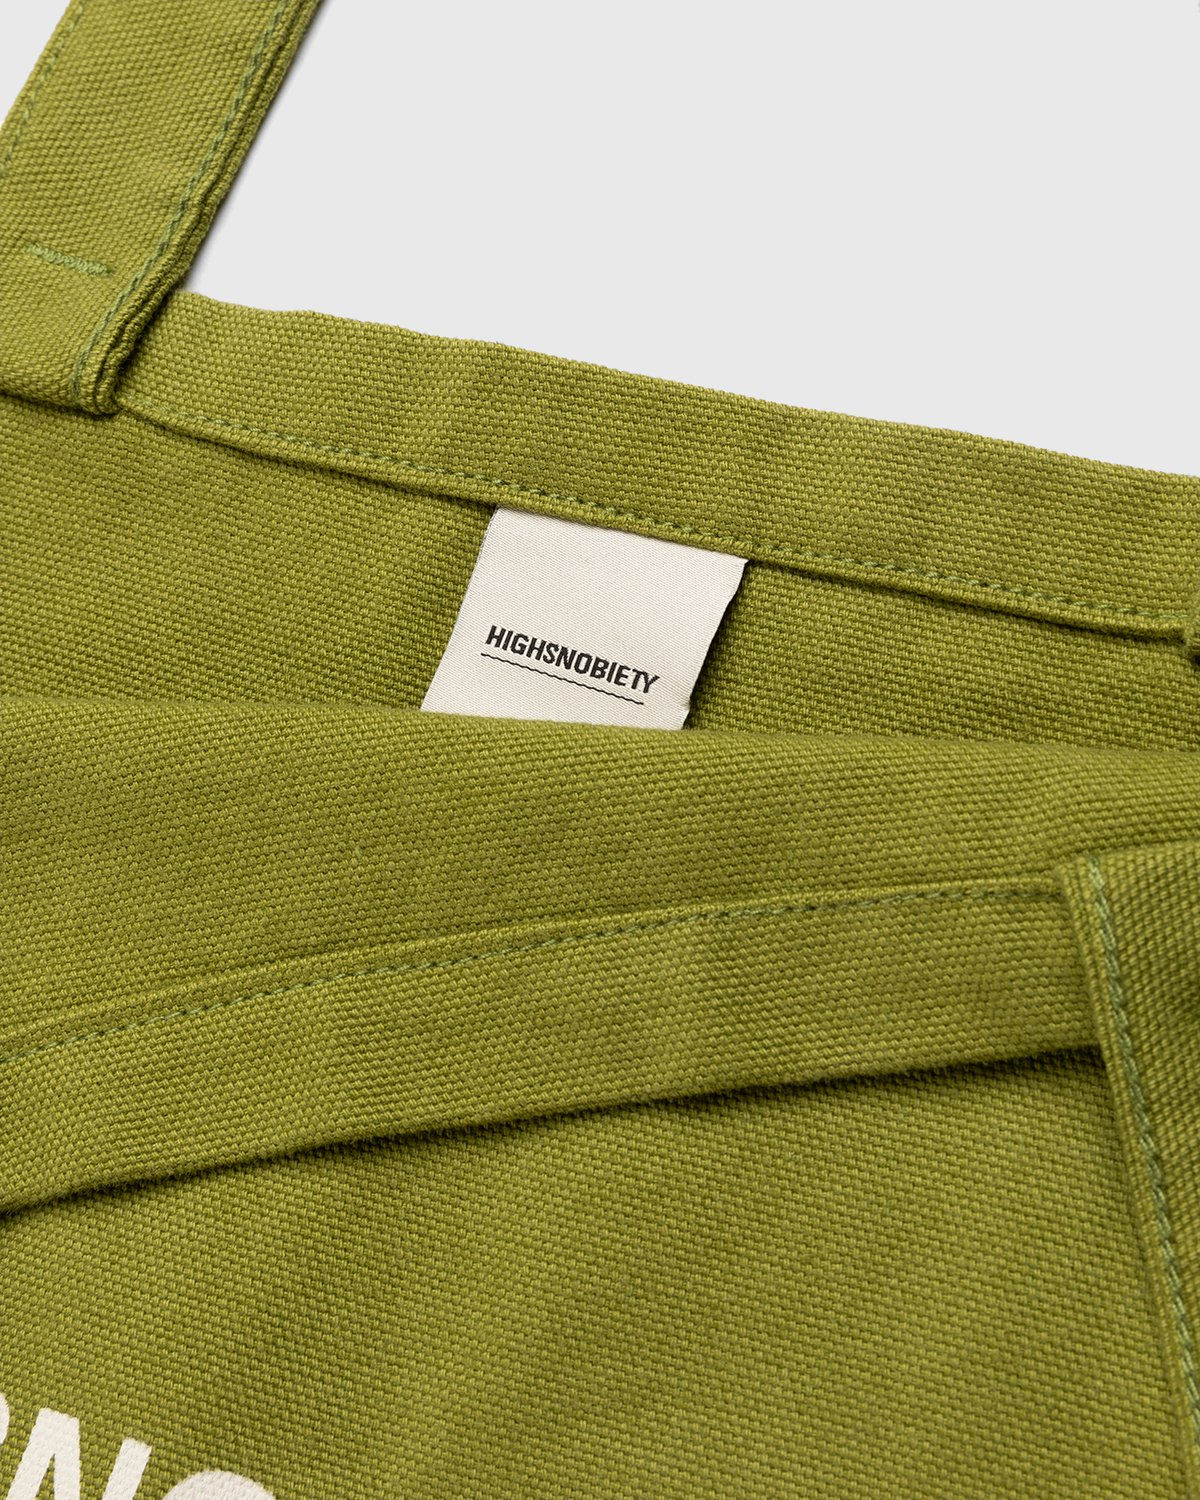 Highsnobiety - HS Sports Logo Tote Bag Green/Khaki - Accessories - Green - Image 3